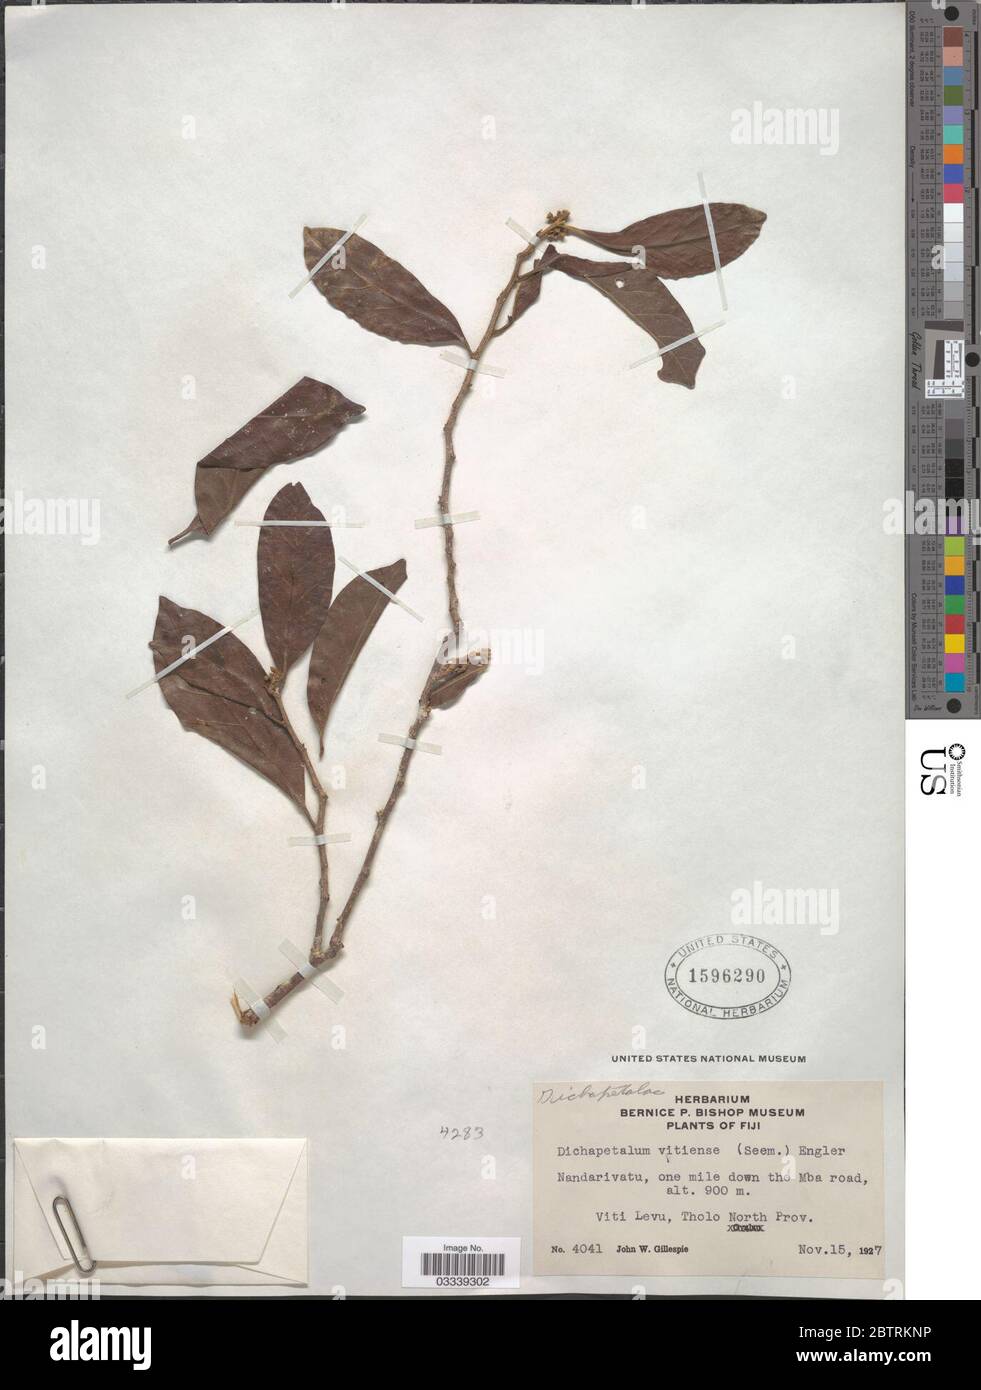 Dichapetalum vitiense Seem Engl. Stock Photo